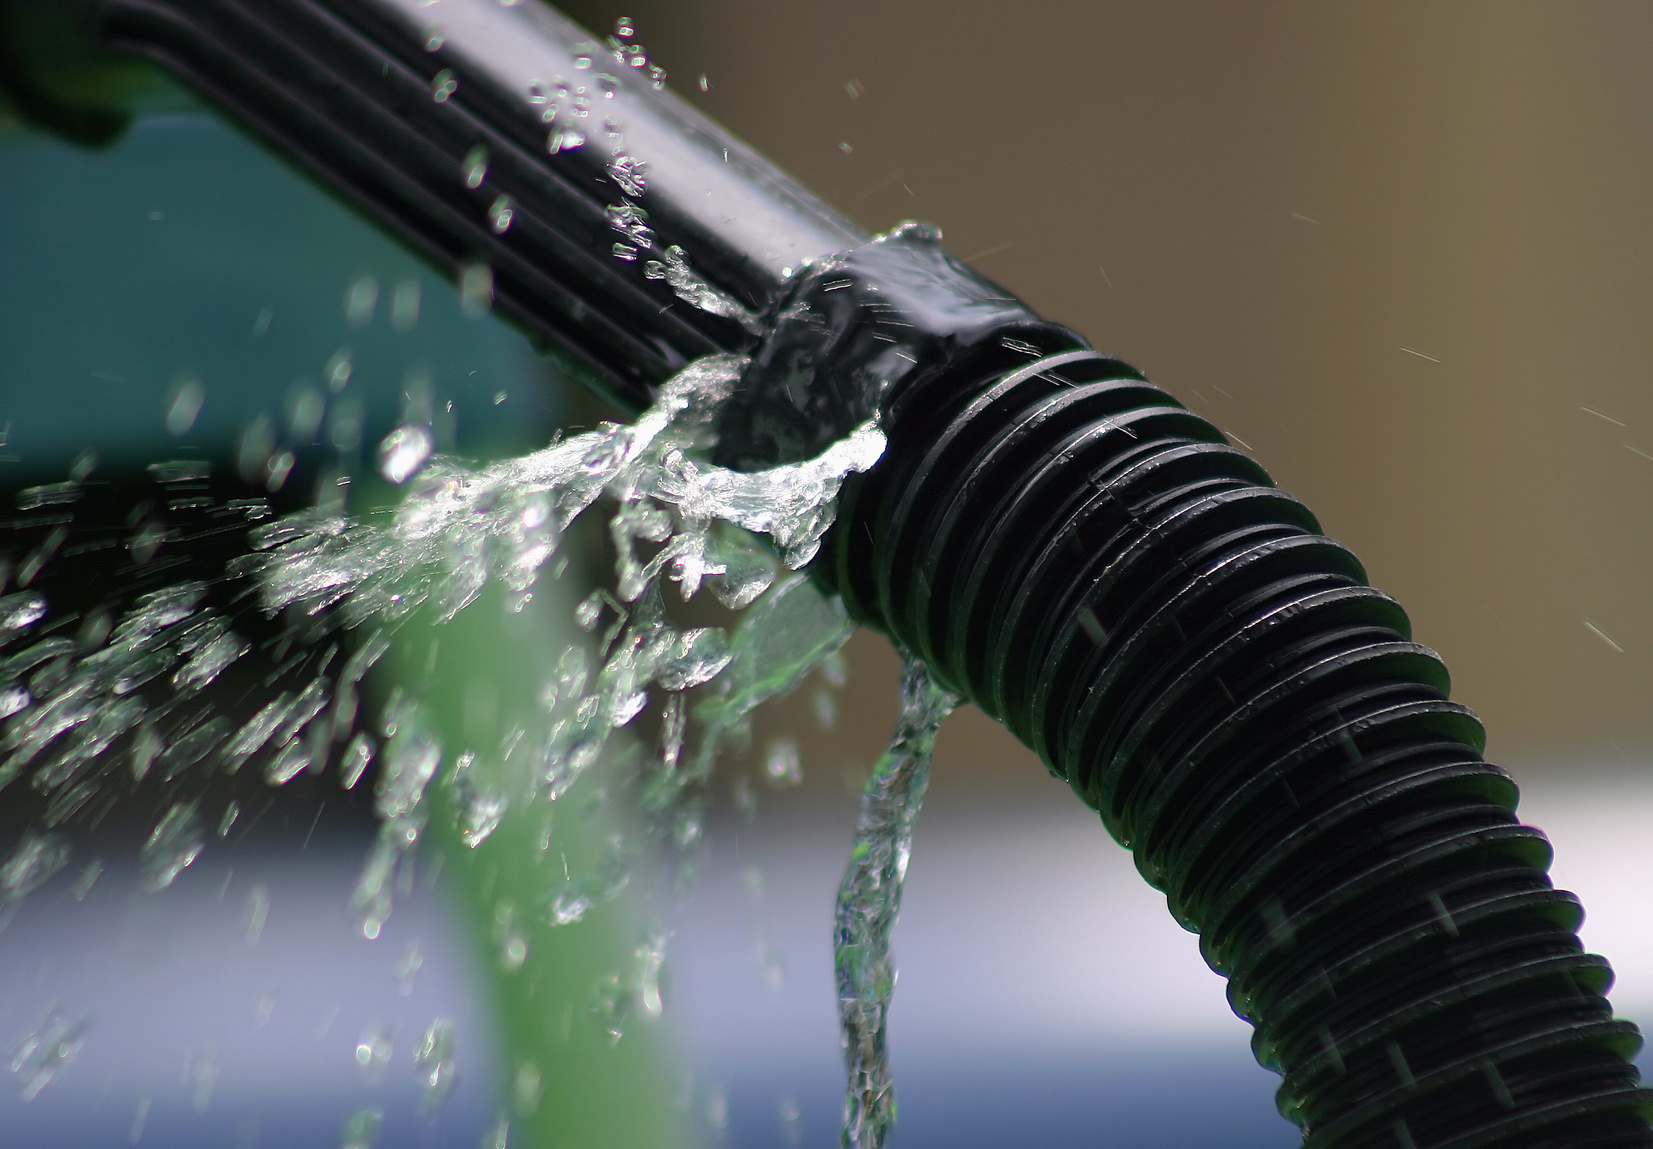 Top Causes of Home Water Leaks